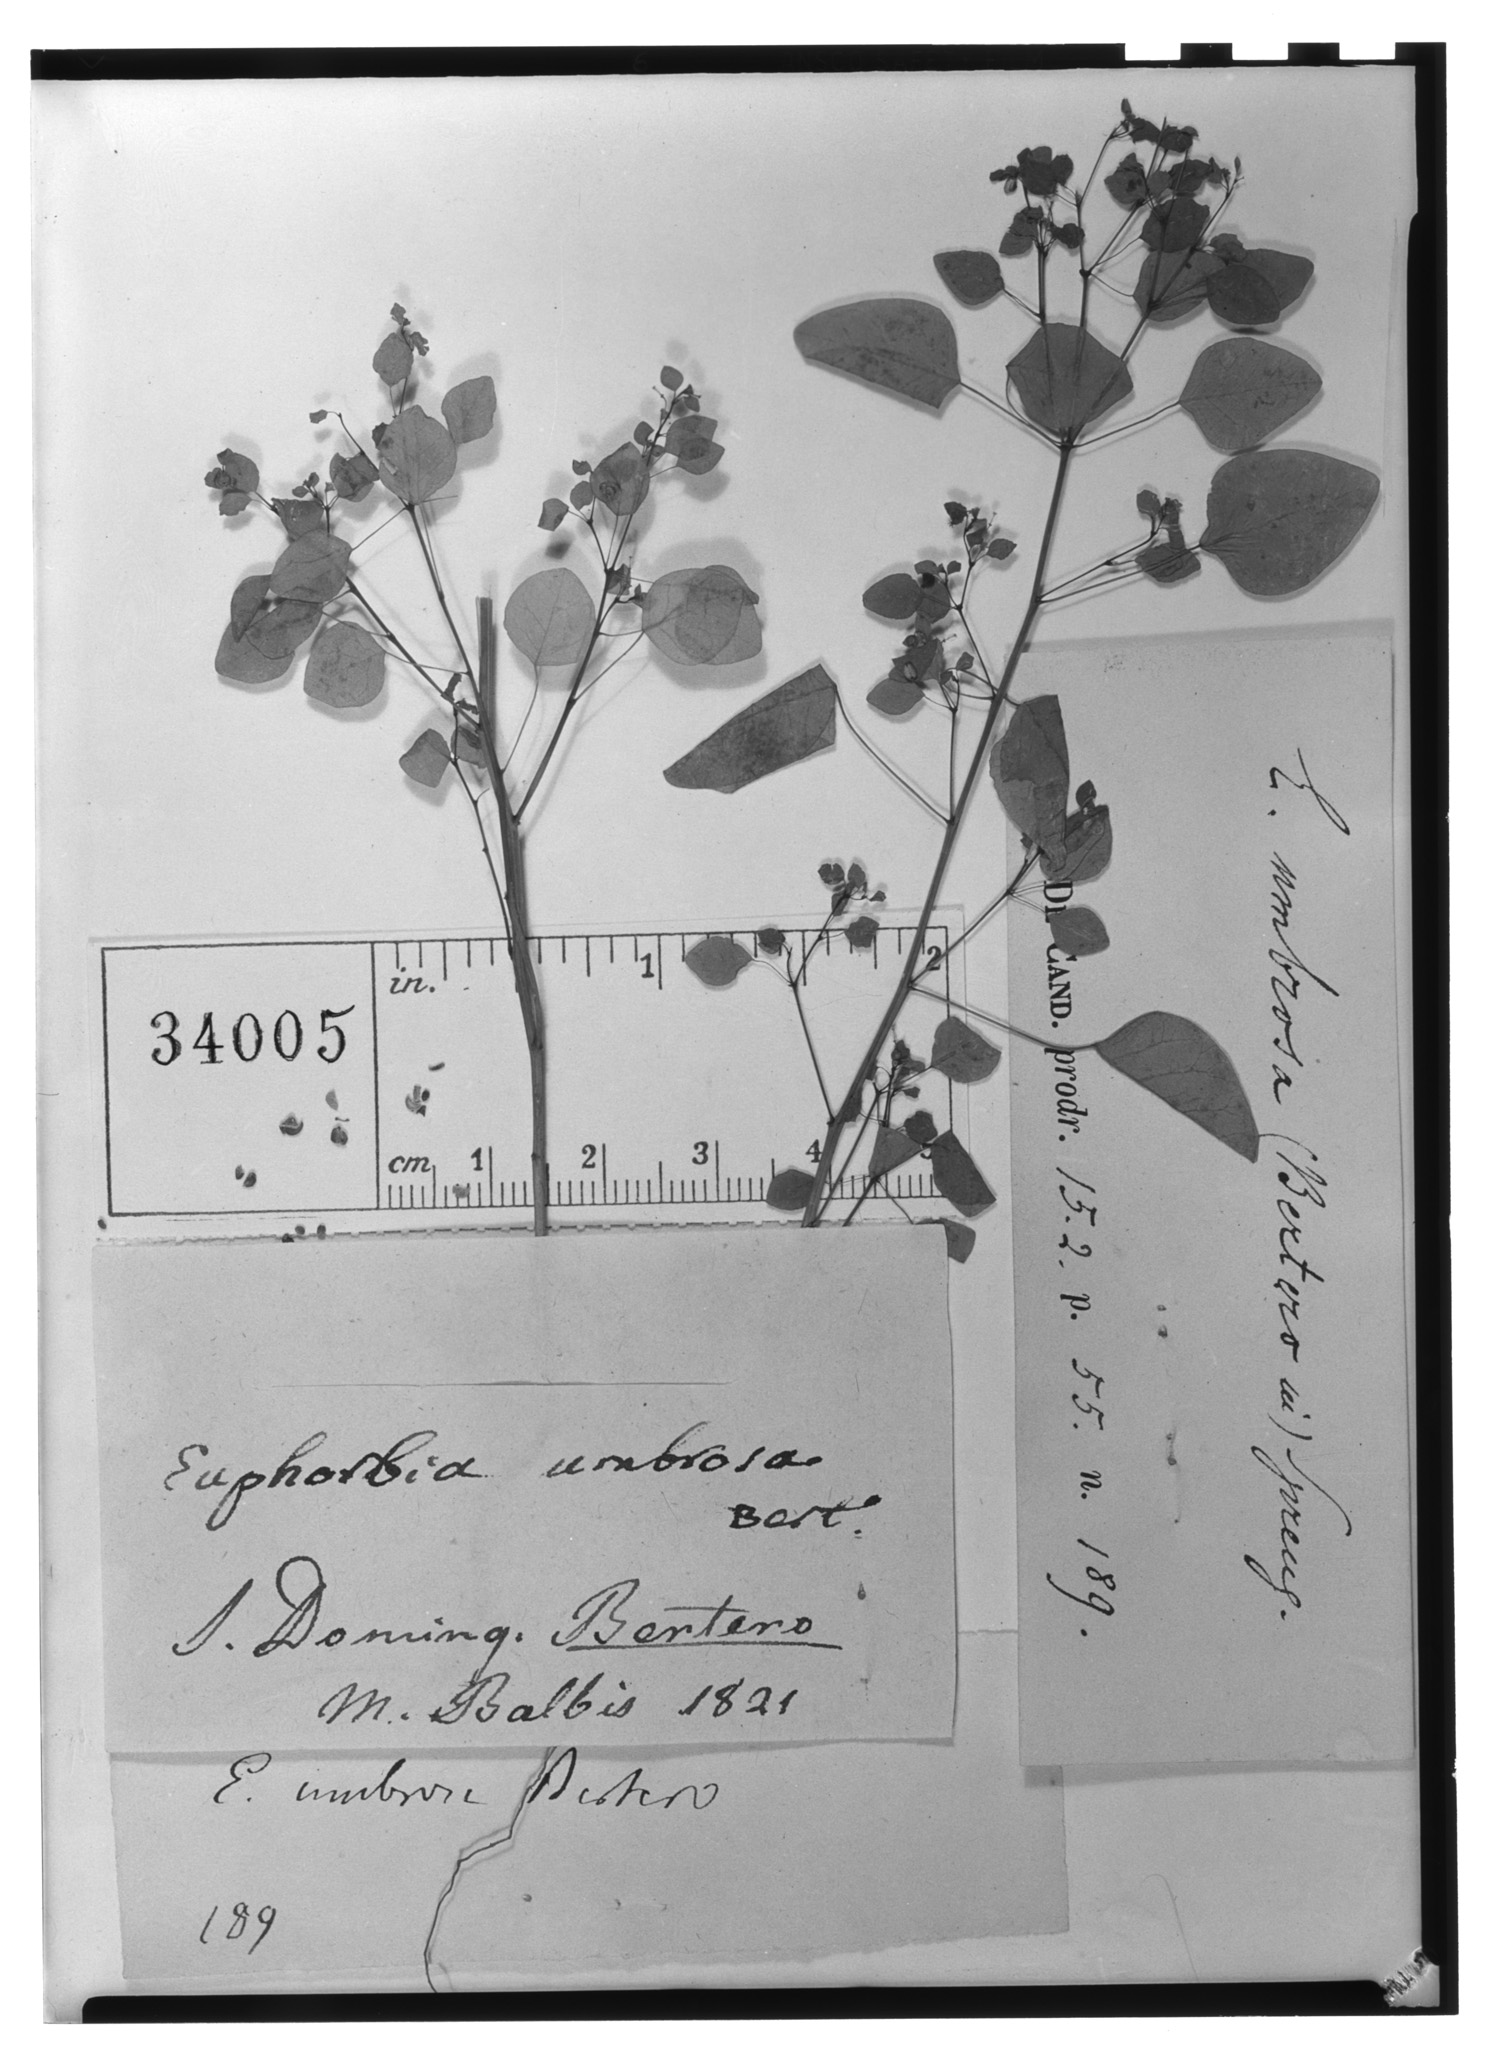 Euphorbia umbrosa image